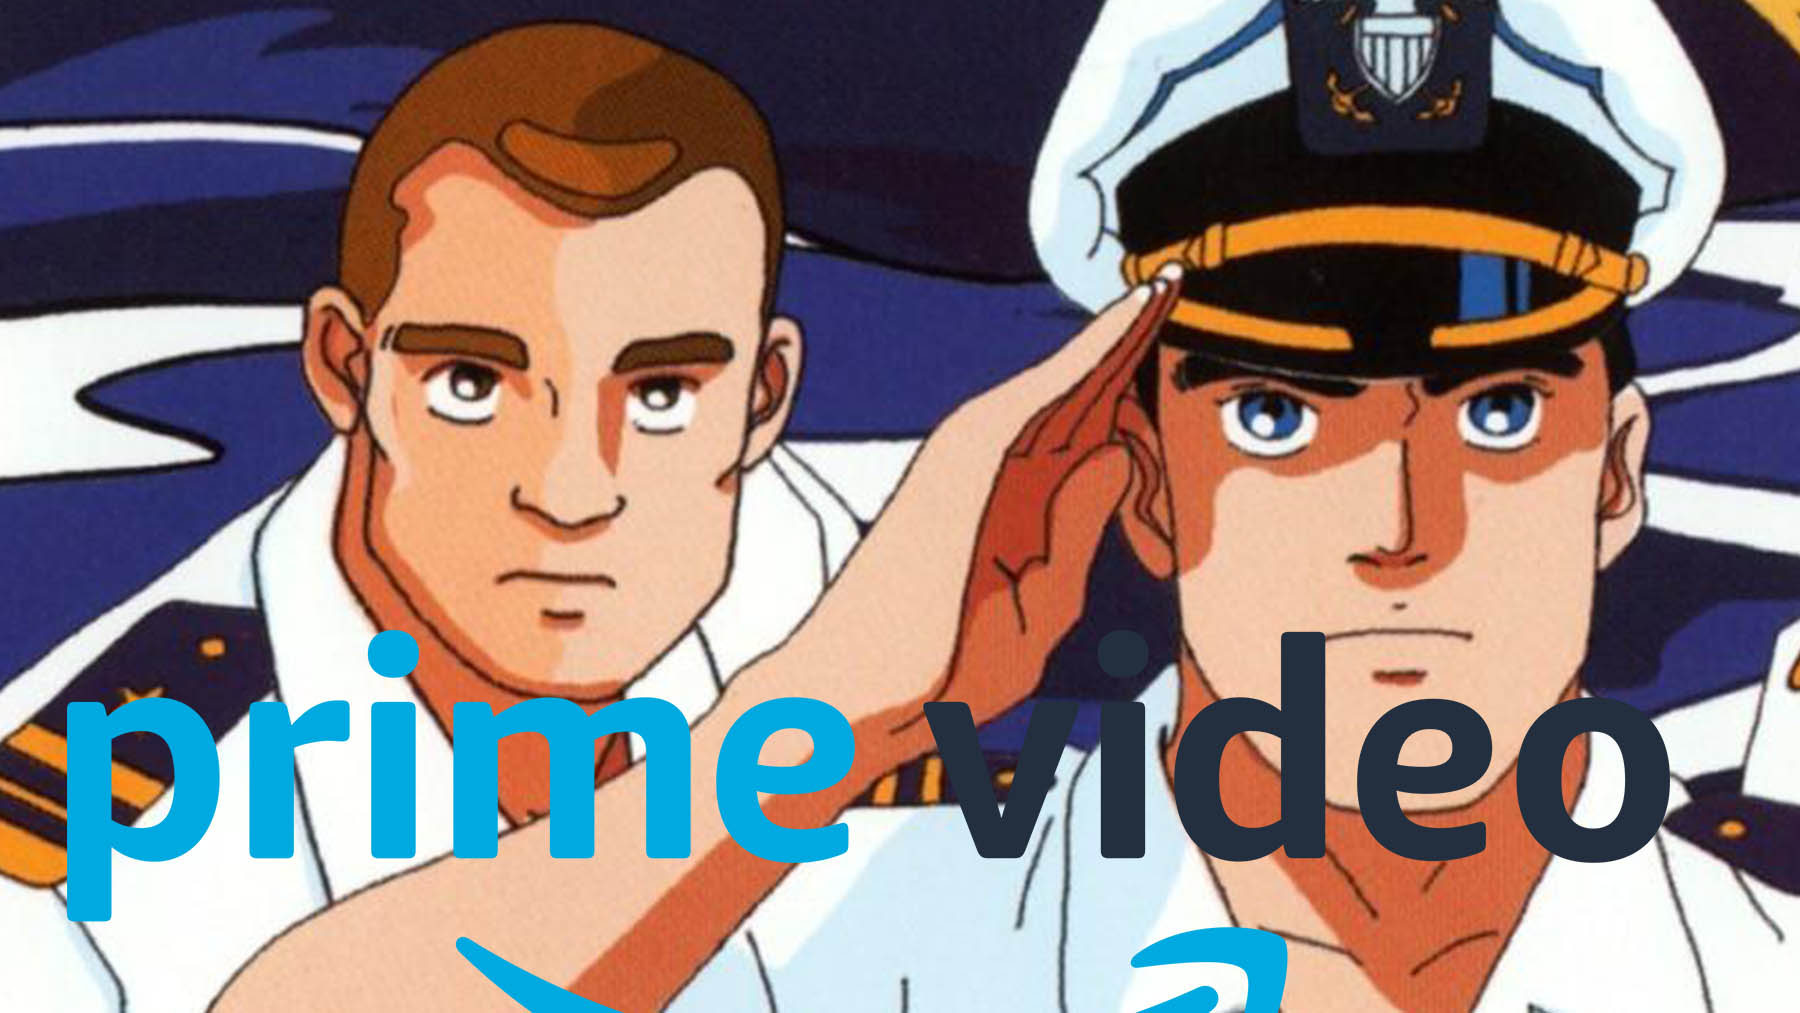 ‘The Silent Service’: Amazon Prime Video adaptará el manga de Kawaguchi Kaiji